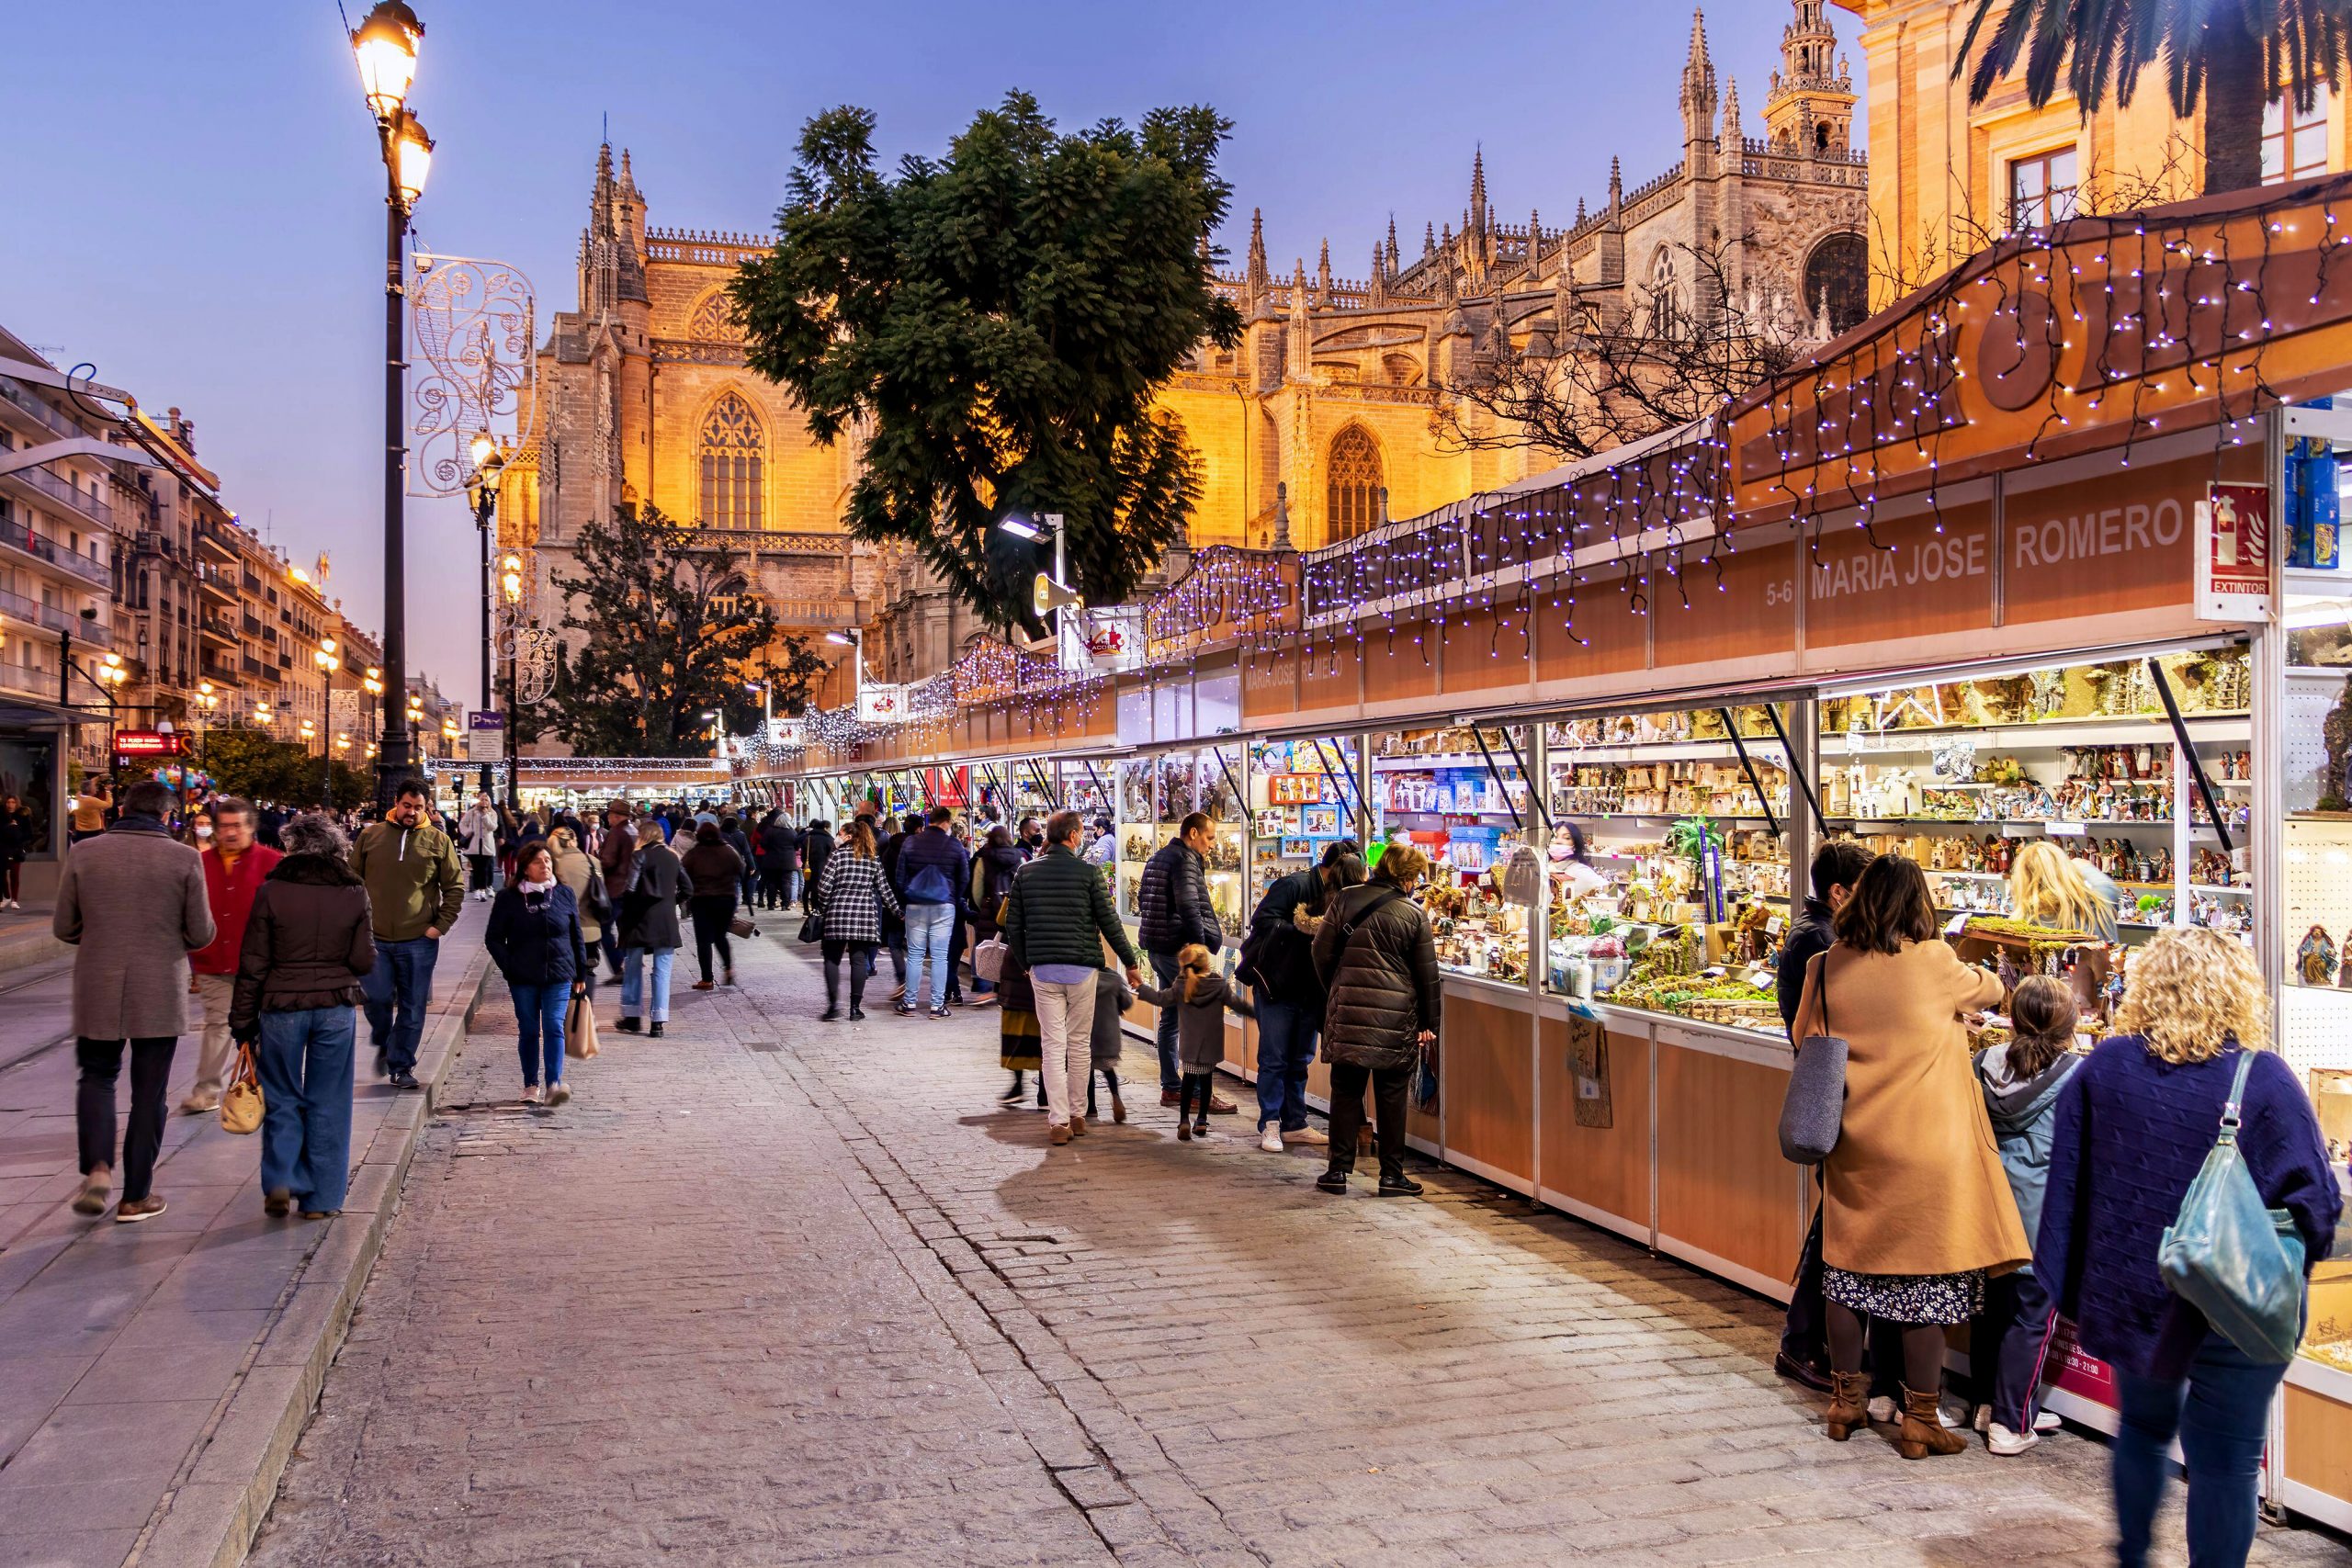 Seville Christmas Market - Best Christmas Markets in Europe